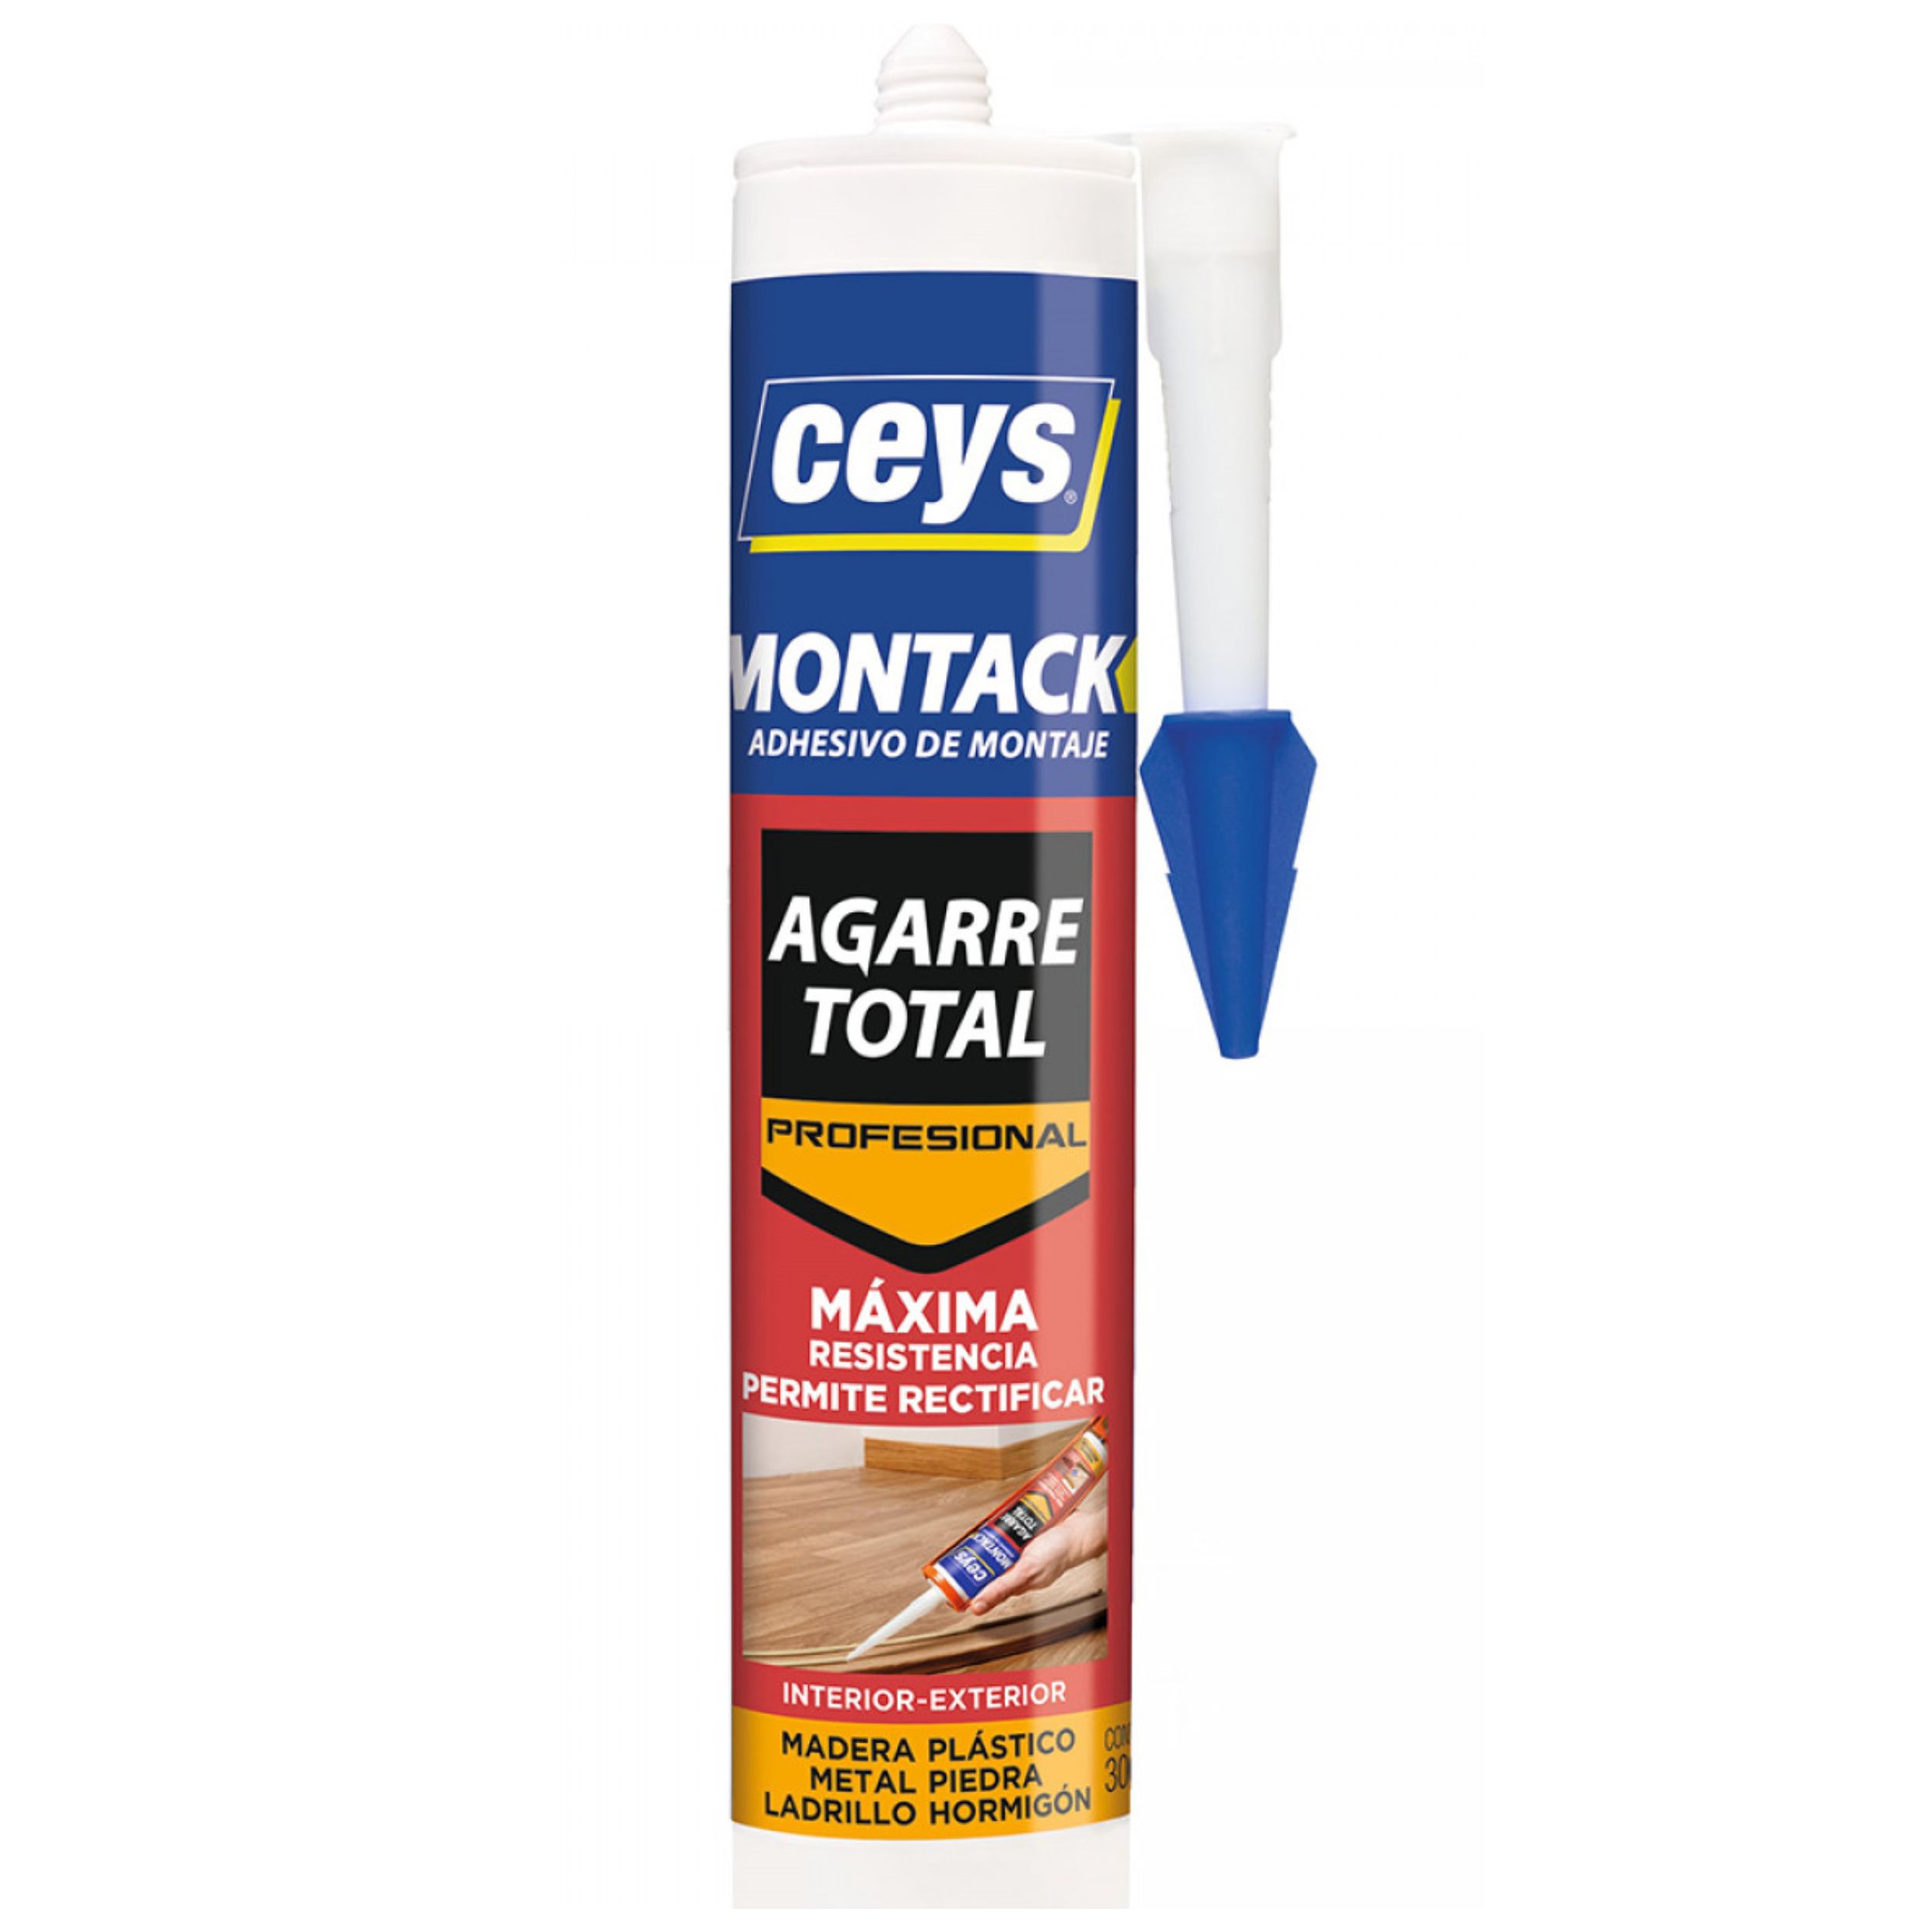 Adhesivo de montaje Montack Xpress Ceys 100ml